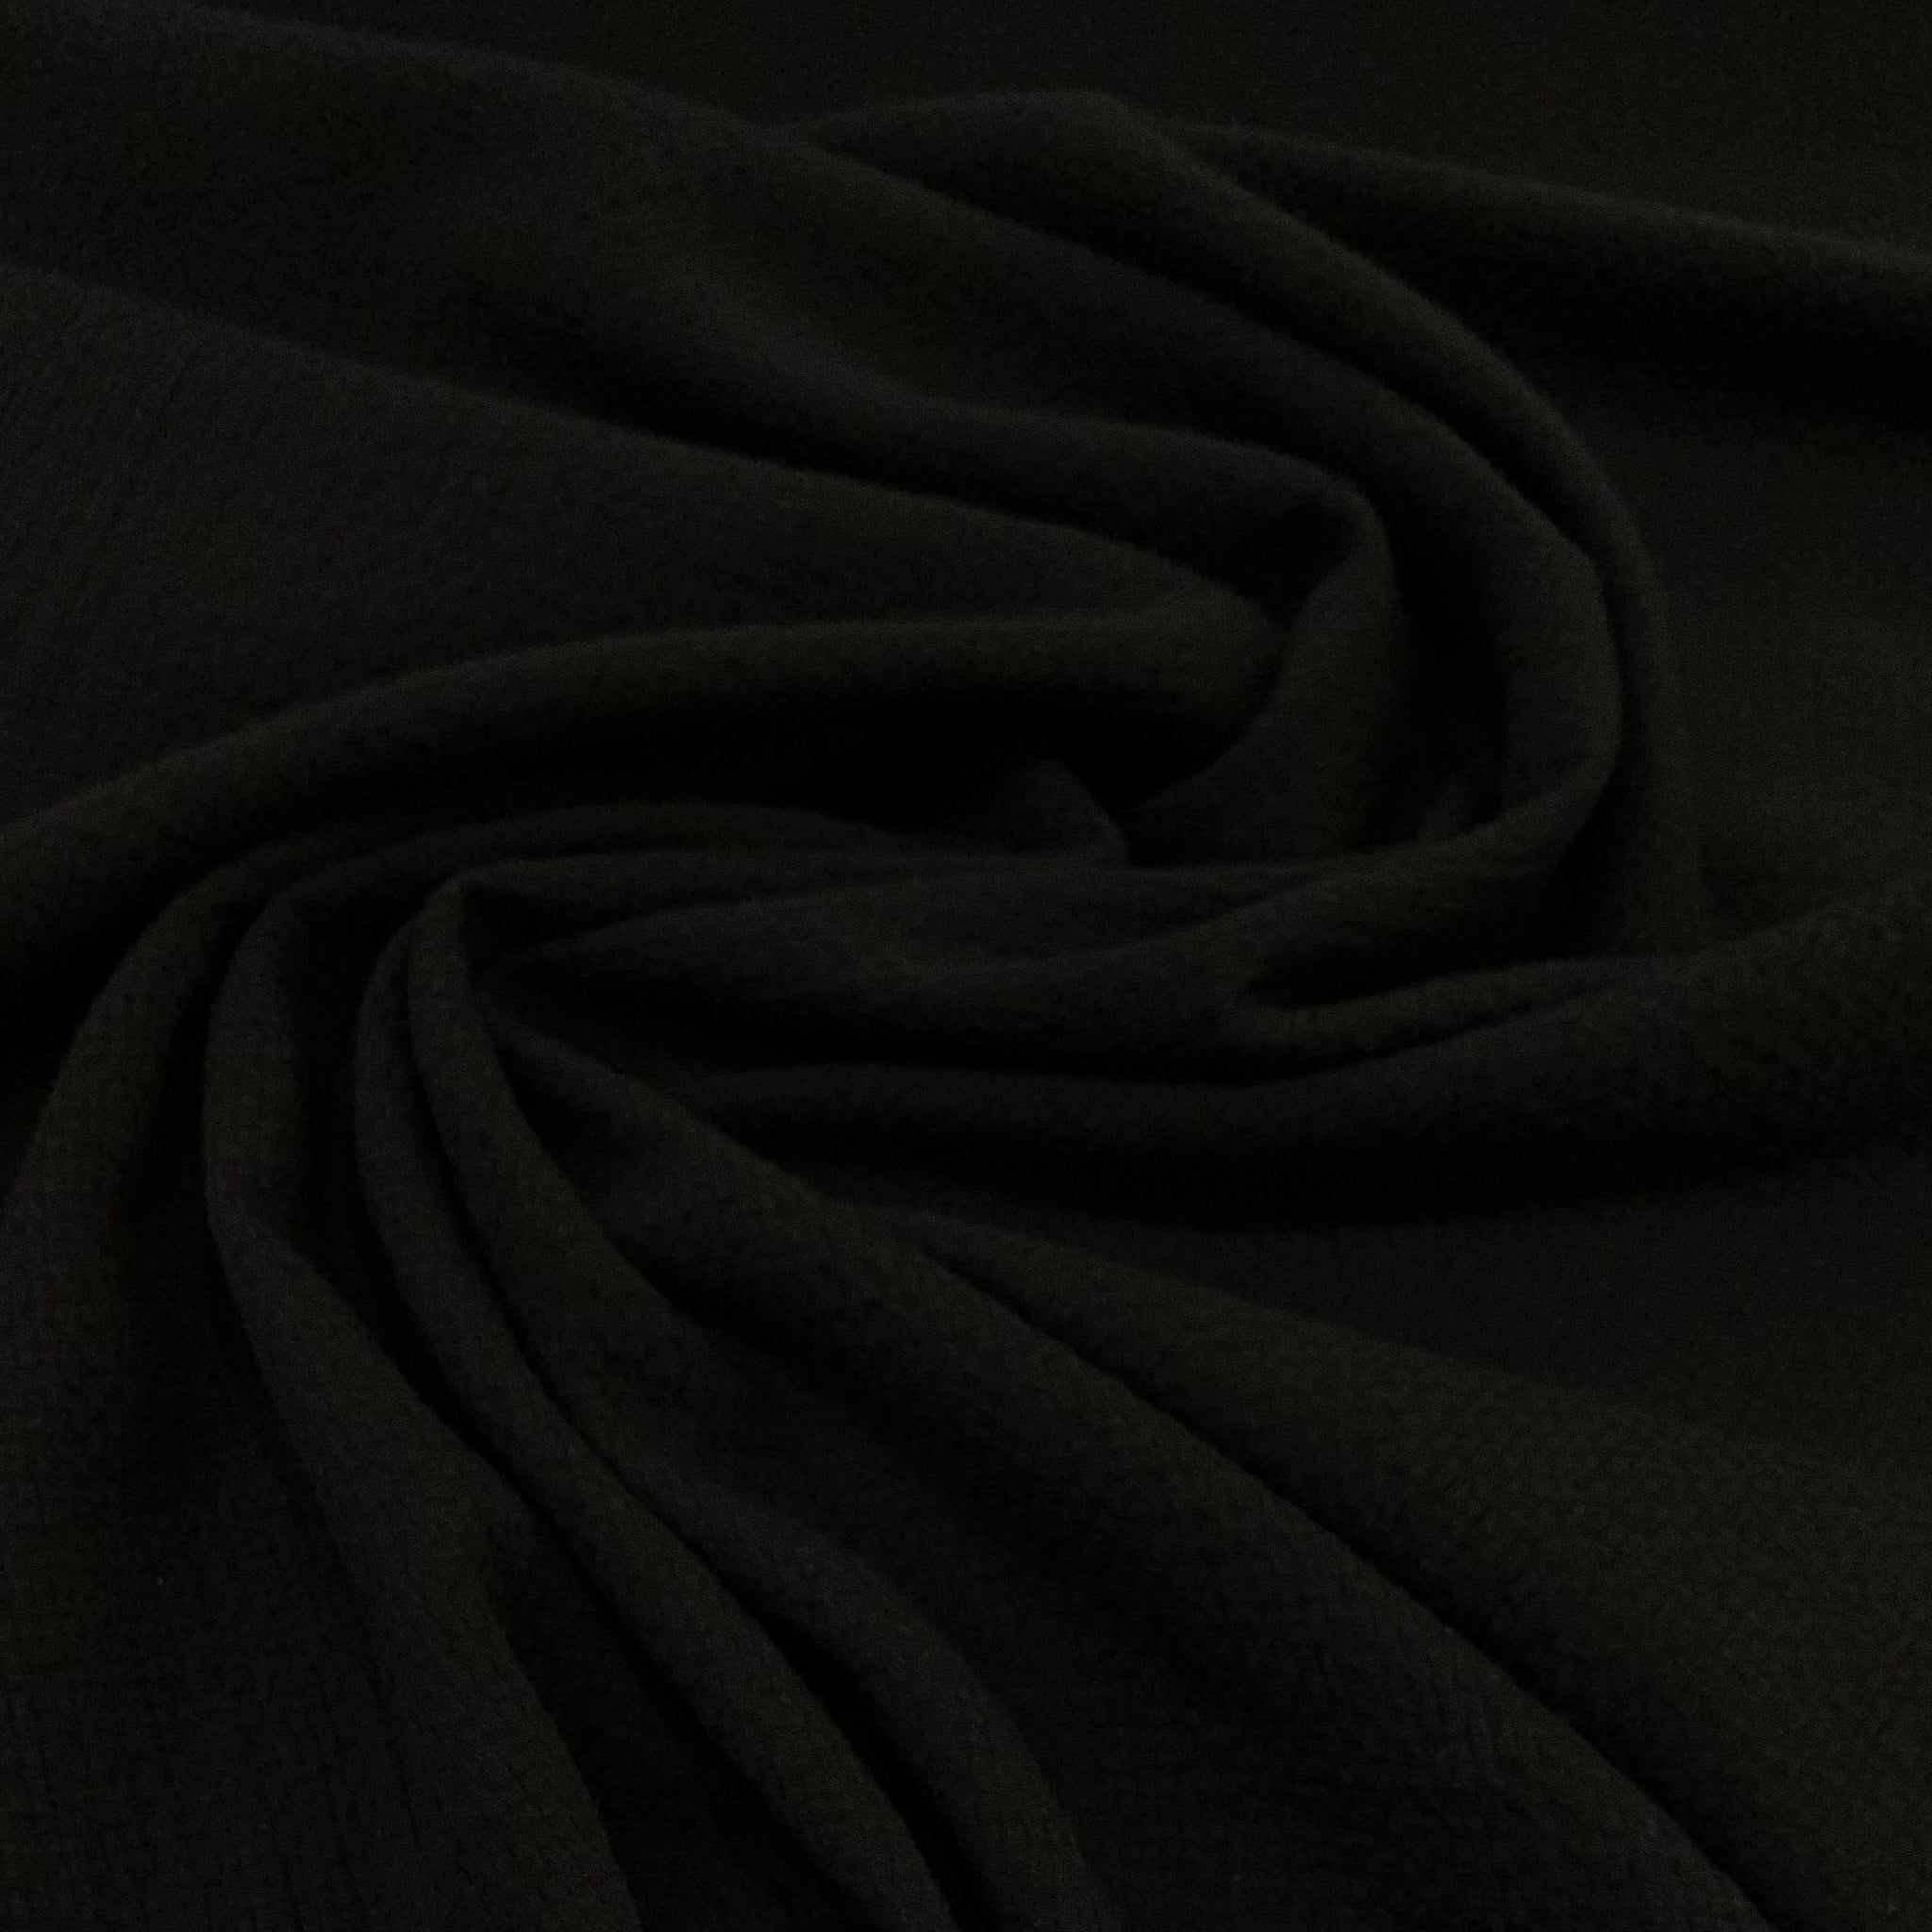 Seersucker (ish) Cotton Fabric - Black